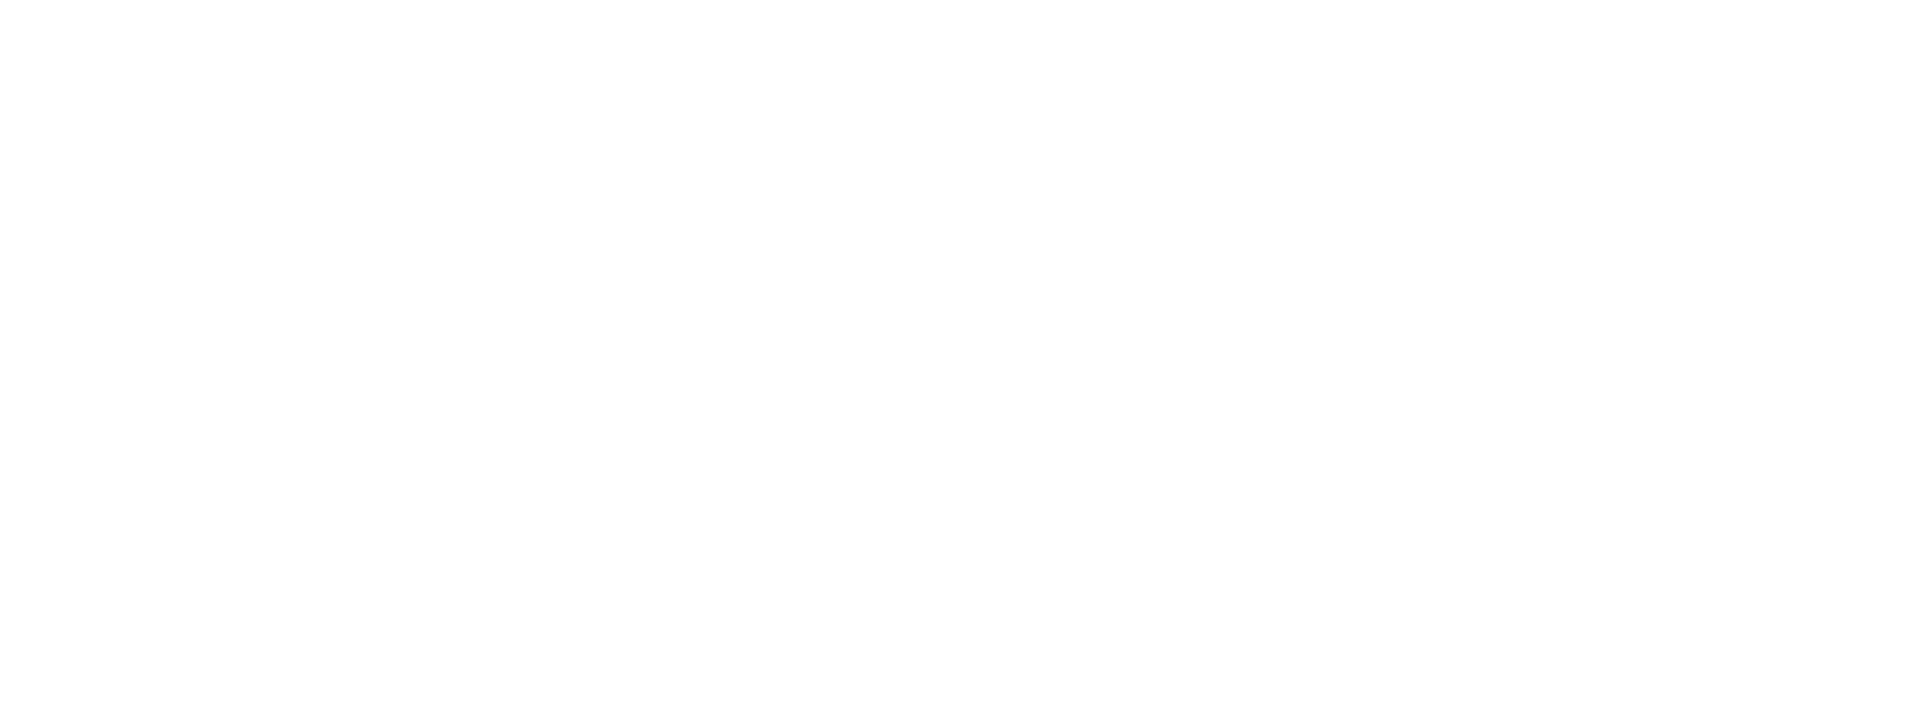 Iglesia Jesucristo el Todopoderoso